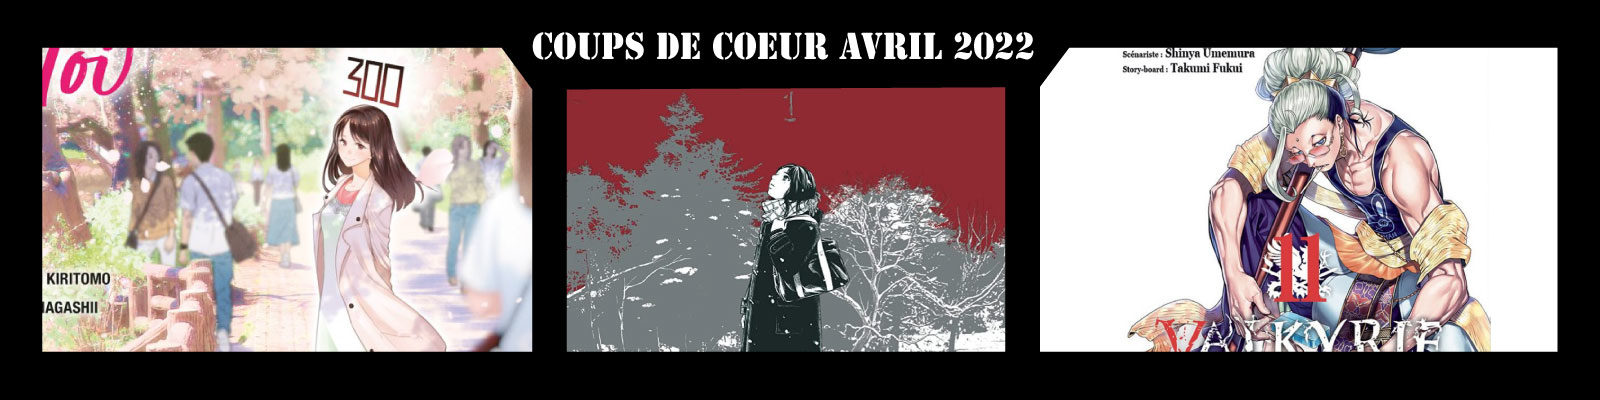 Coups-de-coeur-avril 2022